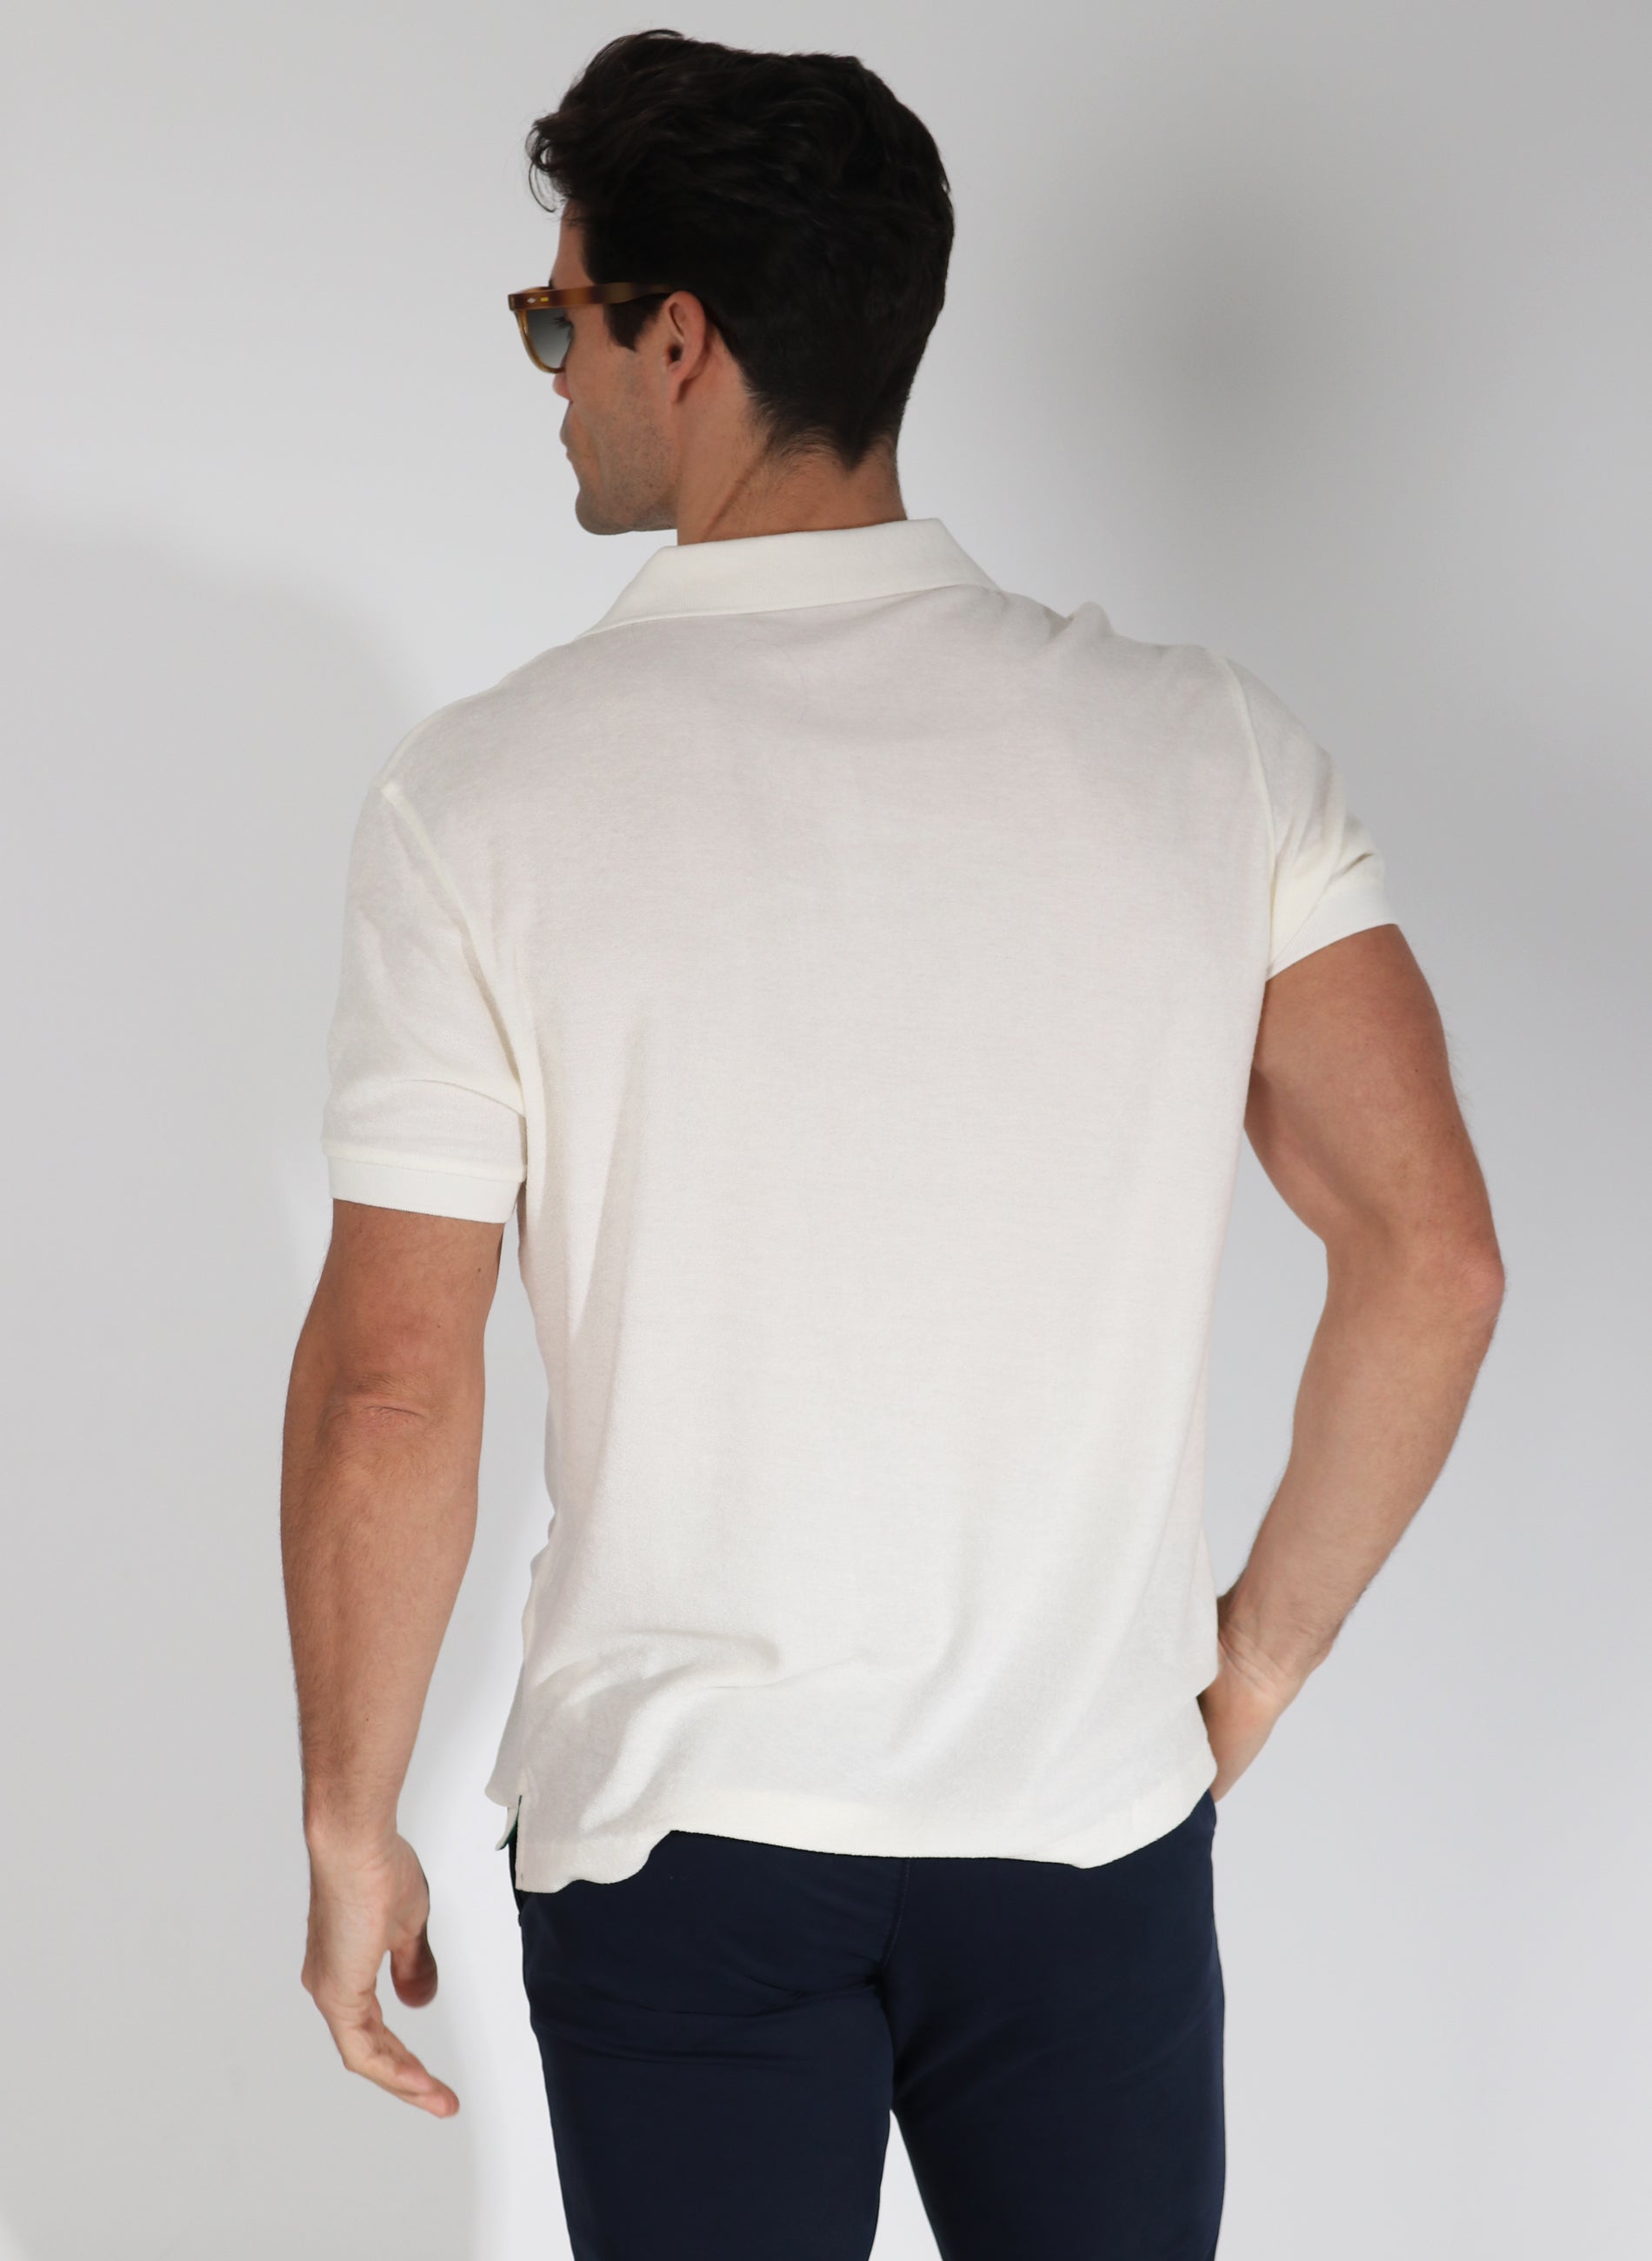 Men's Beige Fine Towel Polo Shirt